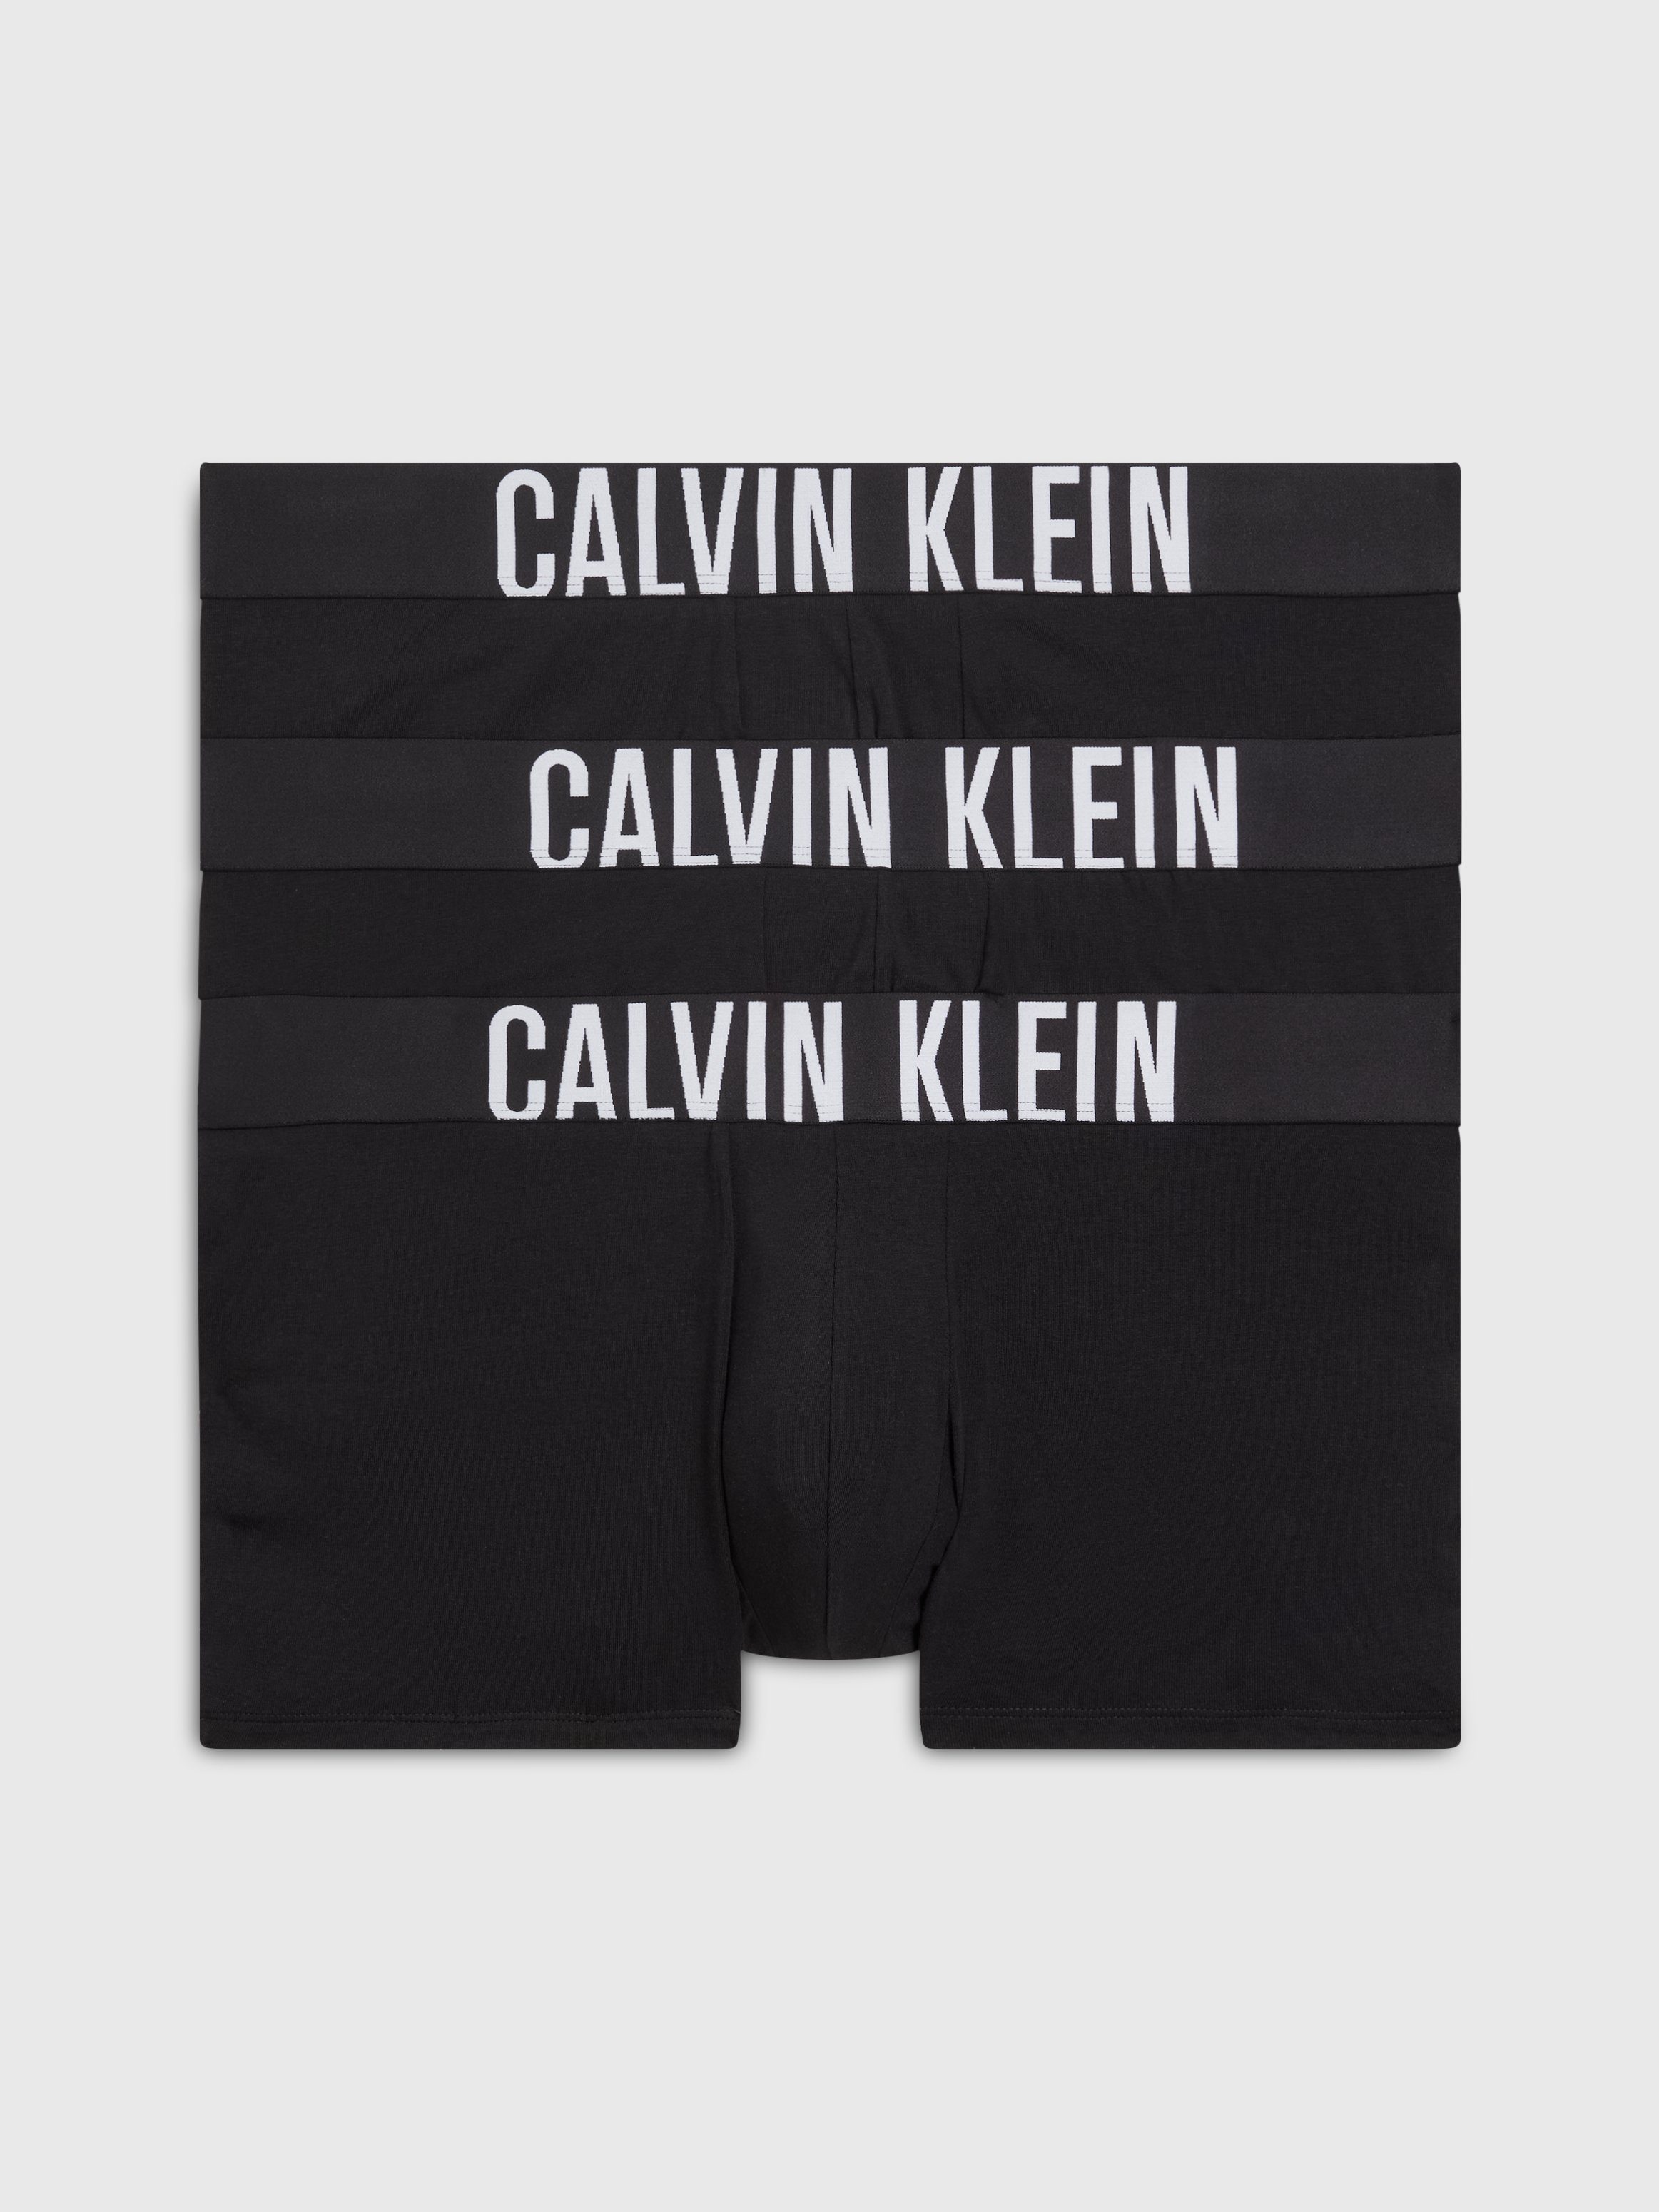 Calvin Klein Trunk 3PK in grote maten (3 stuks Set van 3)